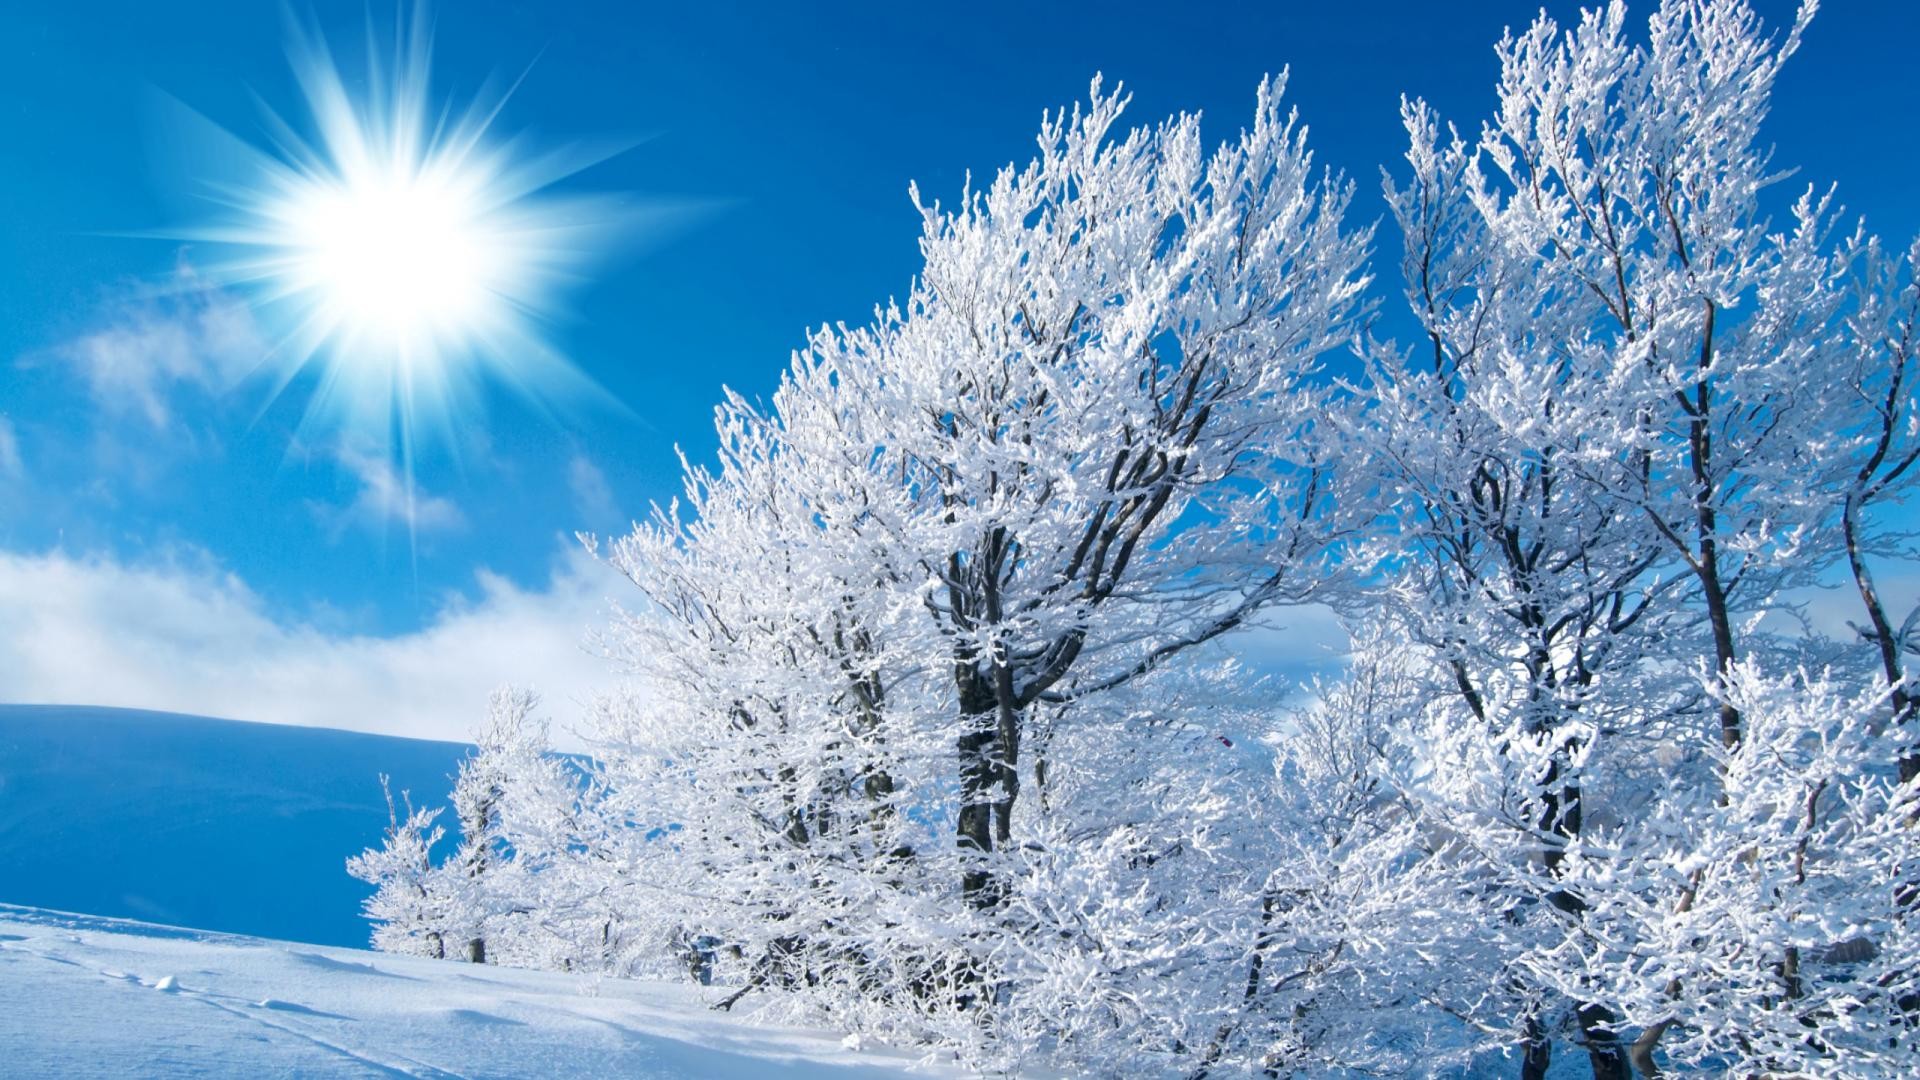 Winter Pictures For Desktop Background Image